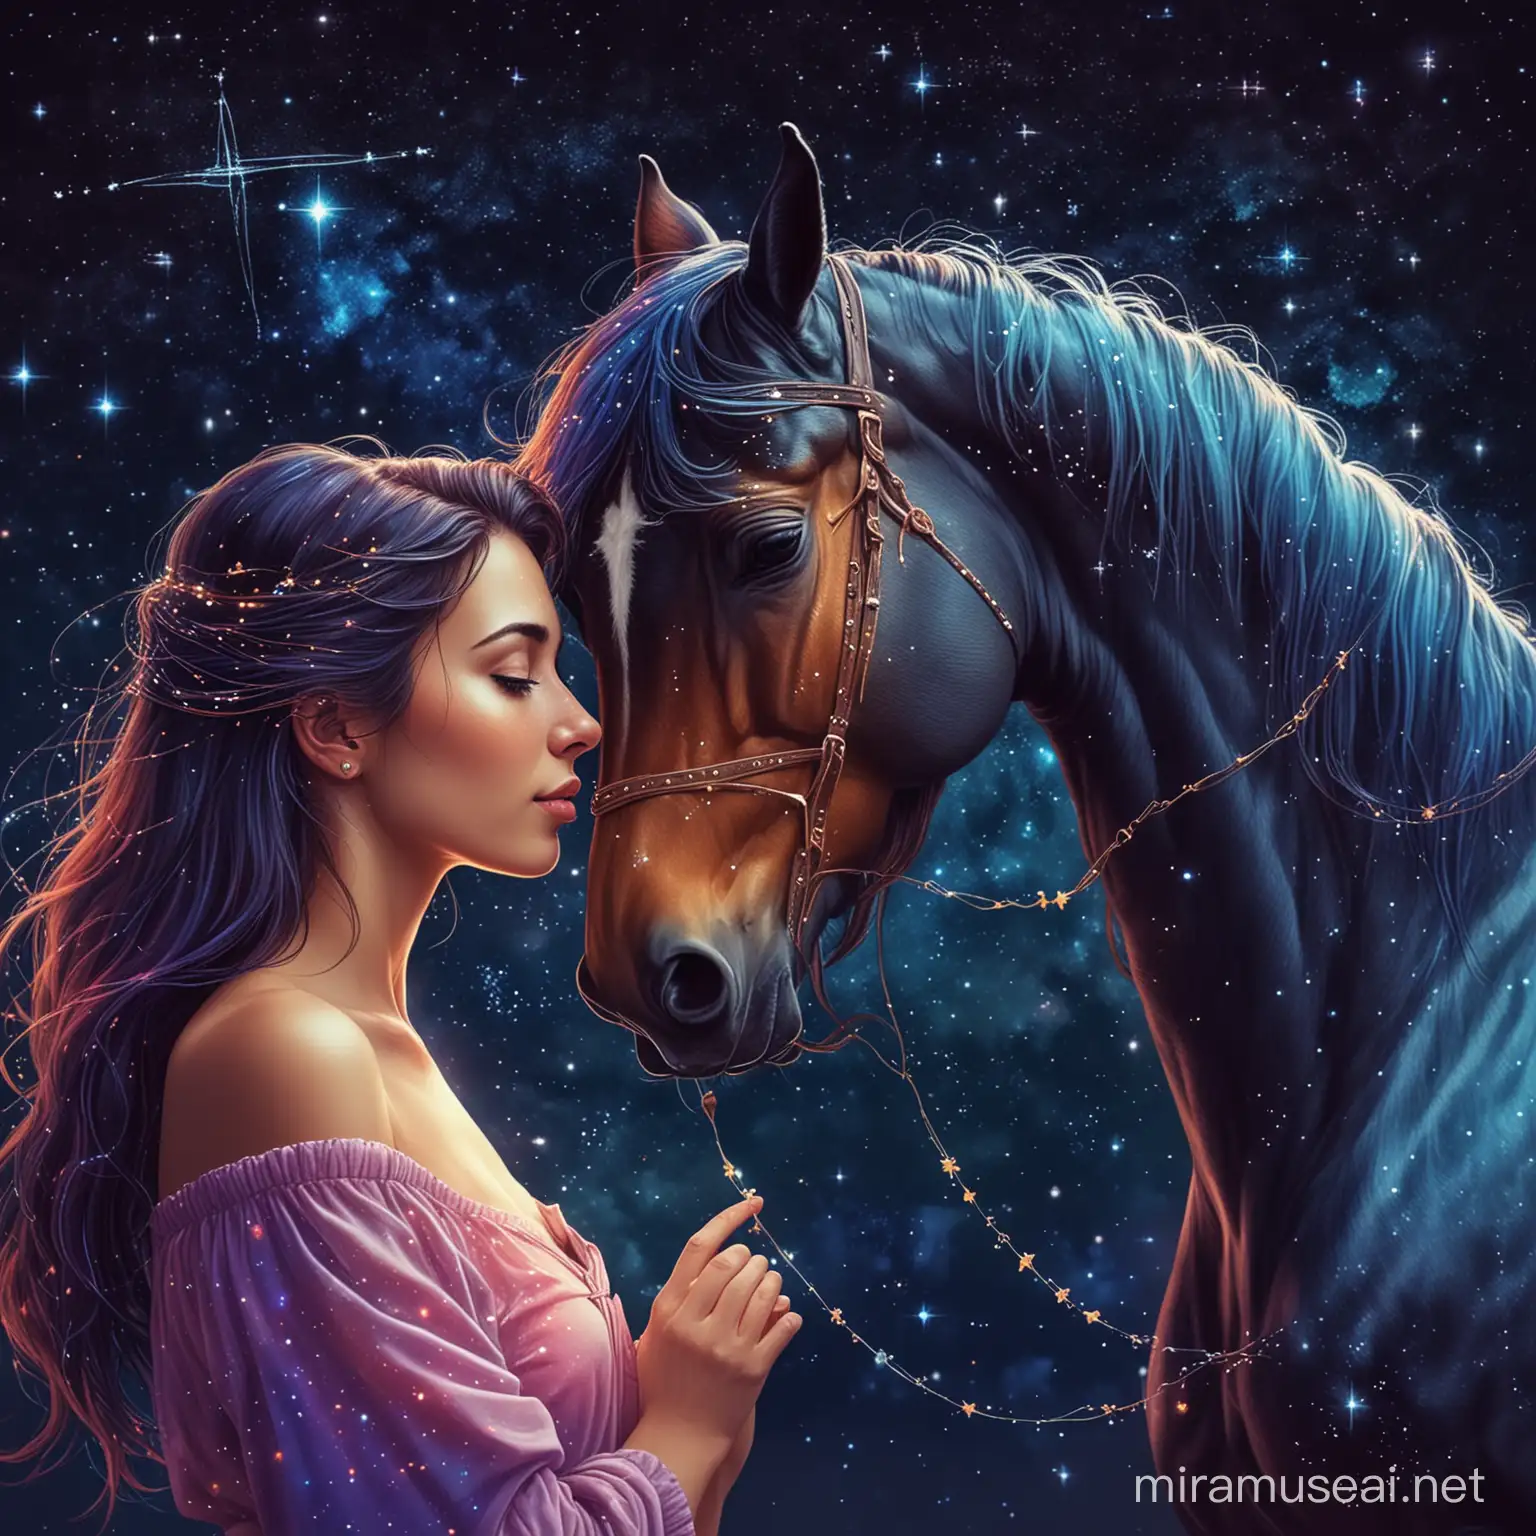 Enchanted Equestrian Love under a Constellation